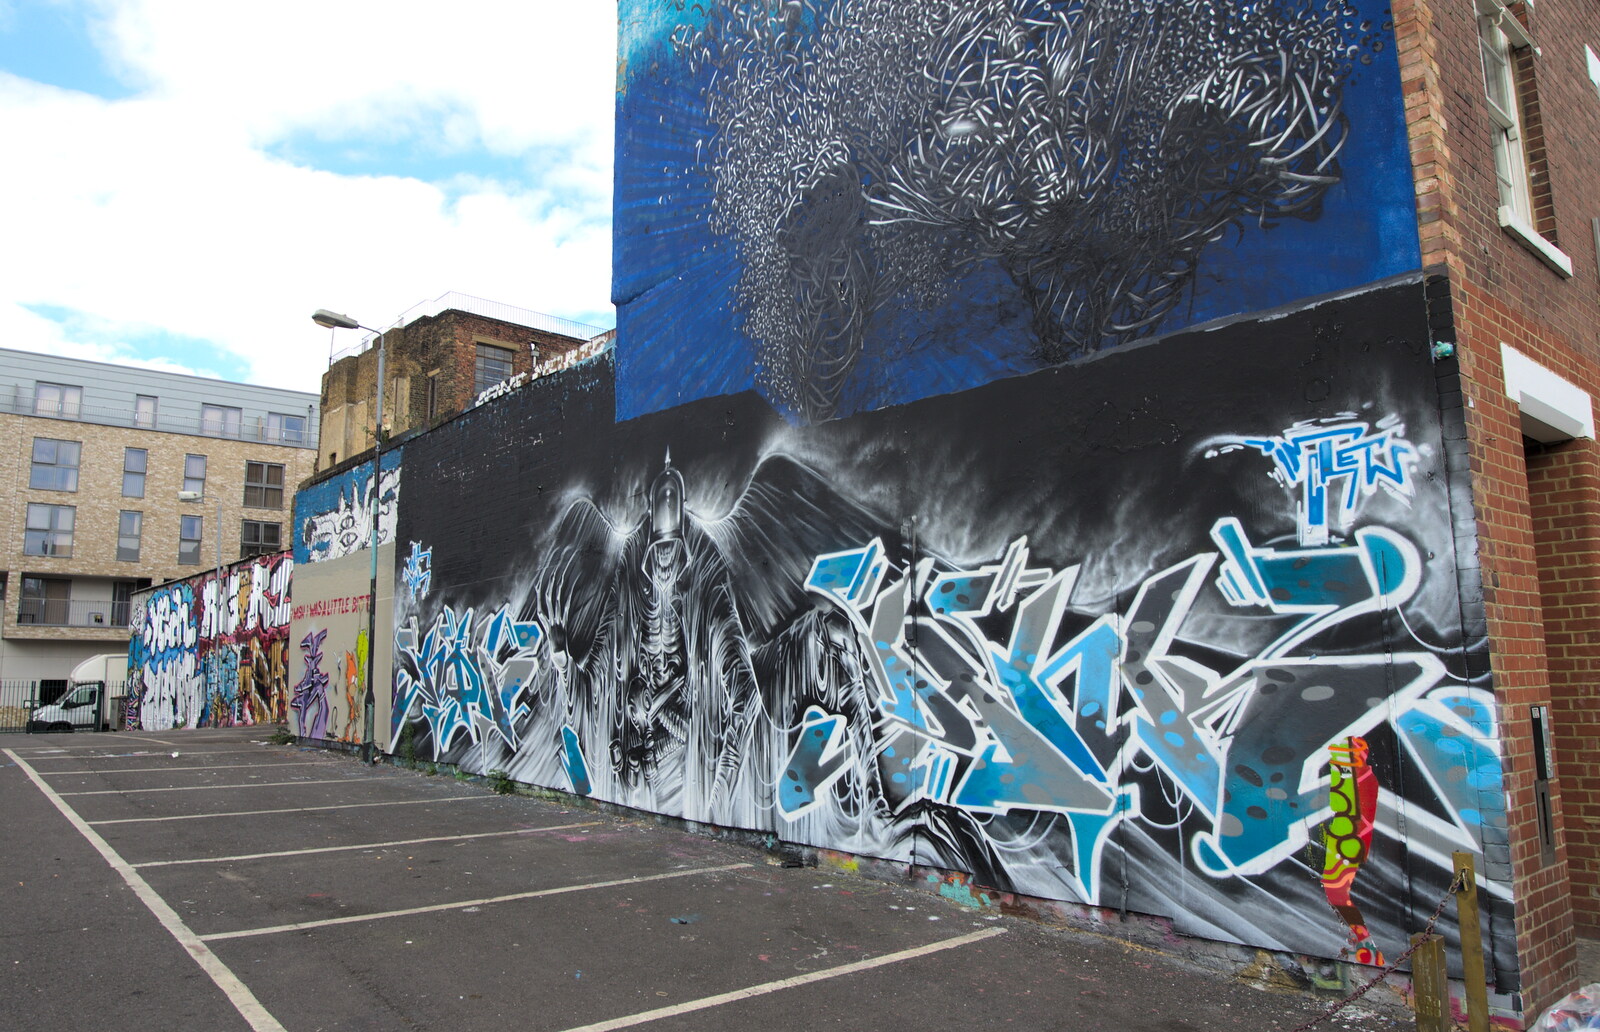 Graffiti in a car park from Spitalfields and Brick Lane Street Art, Whitechapel, London - 10th August 2013